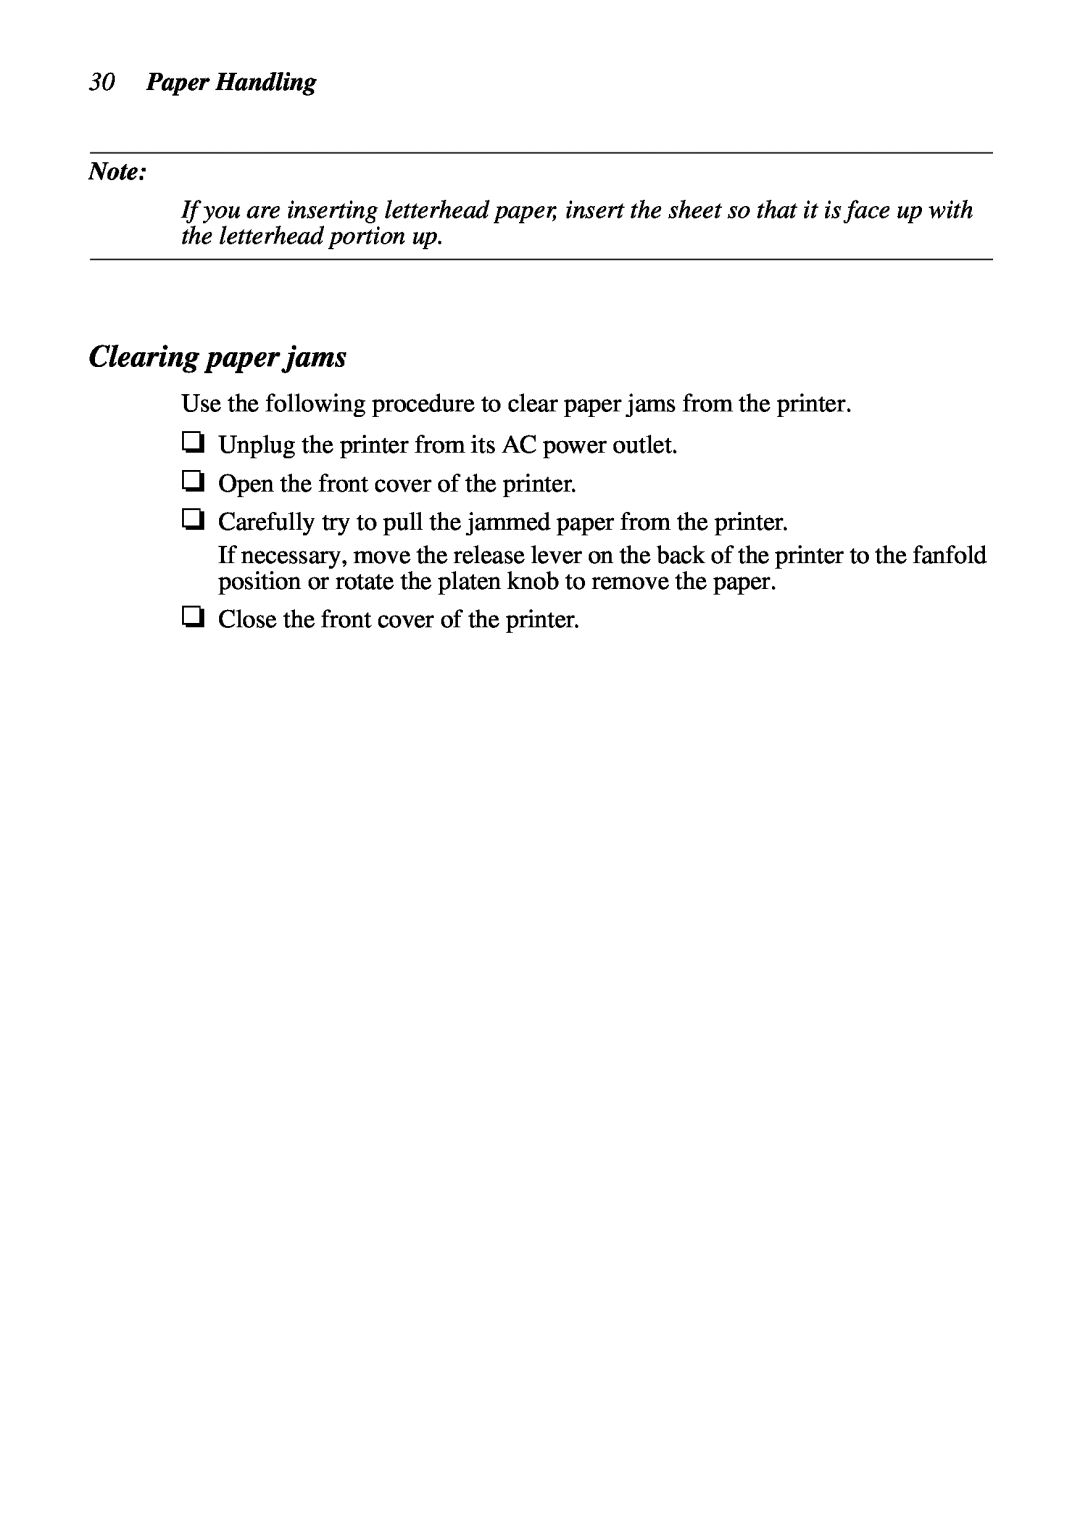 Star Micronics LC-6211 user manual Clearing paper jams, Paper Handling 